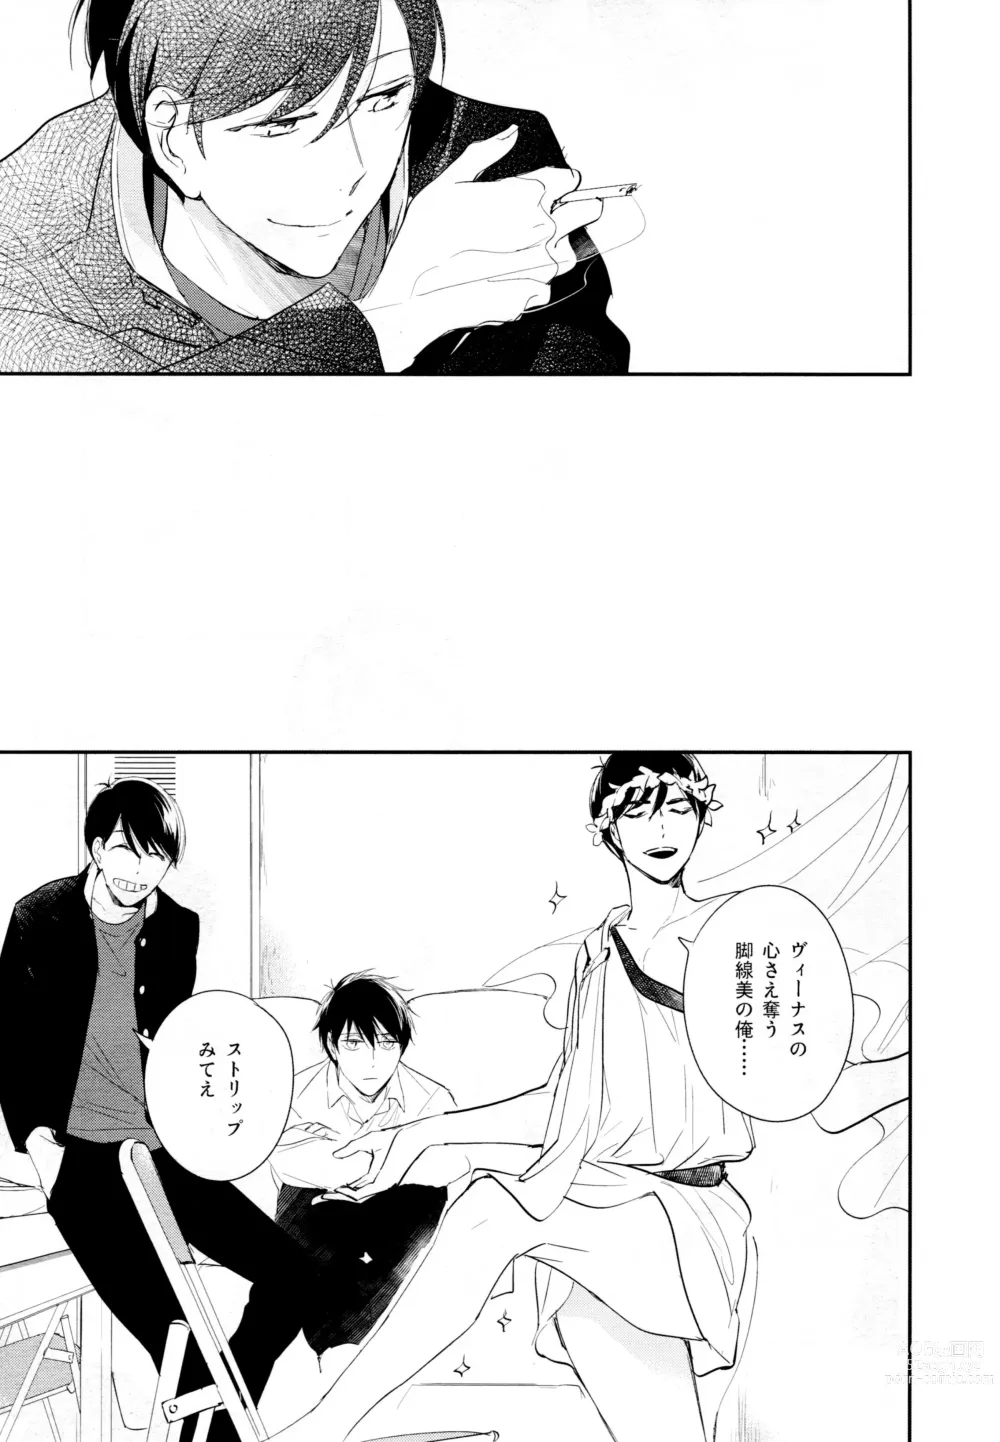 Page 74 of doujinshi Hikari ni Tsuite